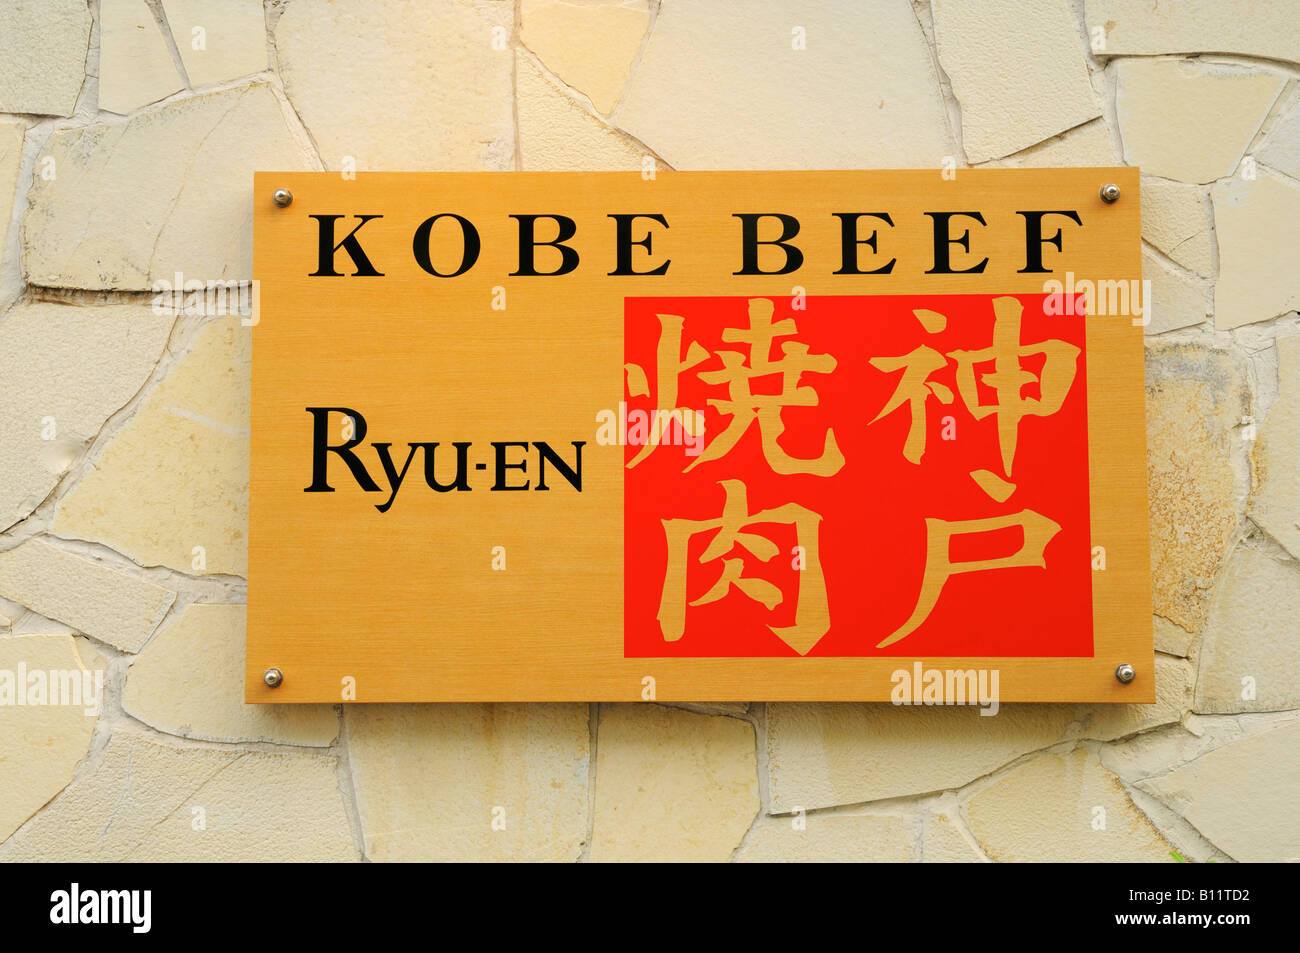 Ryu-en Kobe Beef Stock Photo